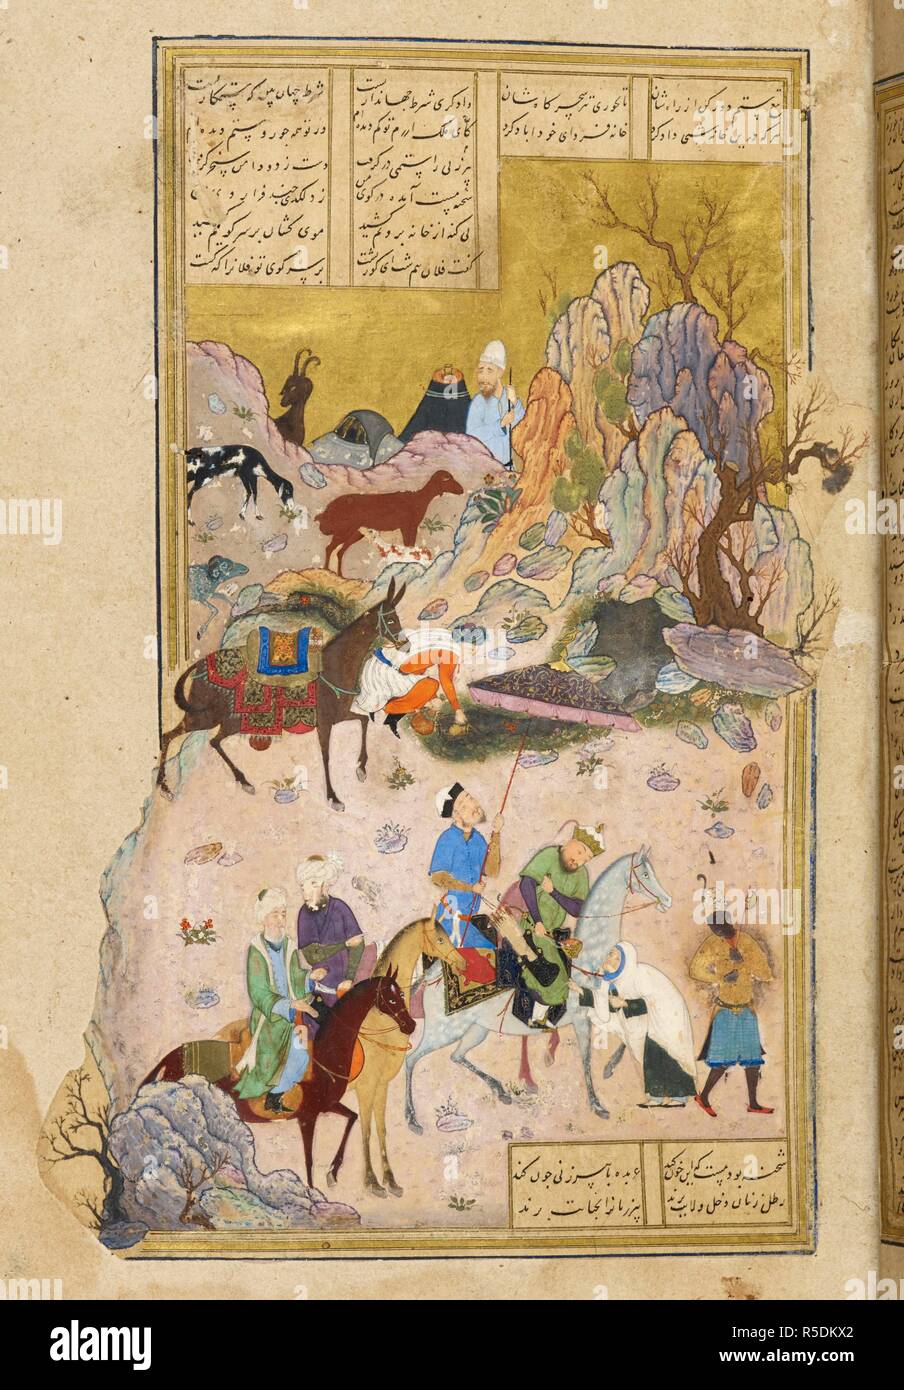 The Seljuk Sultan Sanjar being petitioned by an old woman. Khamsa by Nizami. Herat, 1492-1493. Source: Add. 25900, f.18. Language: Persian. Stock Photo